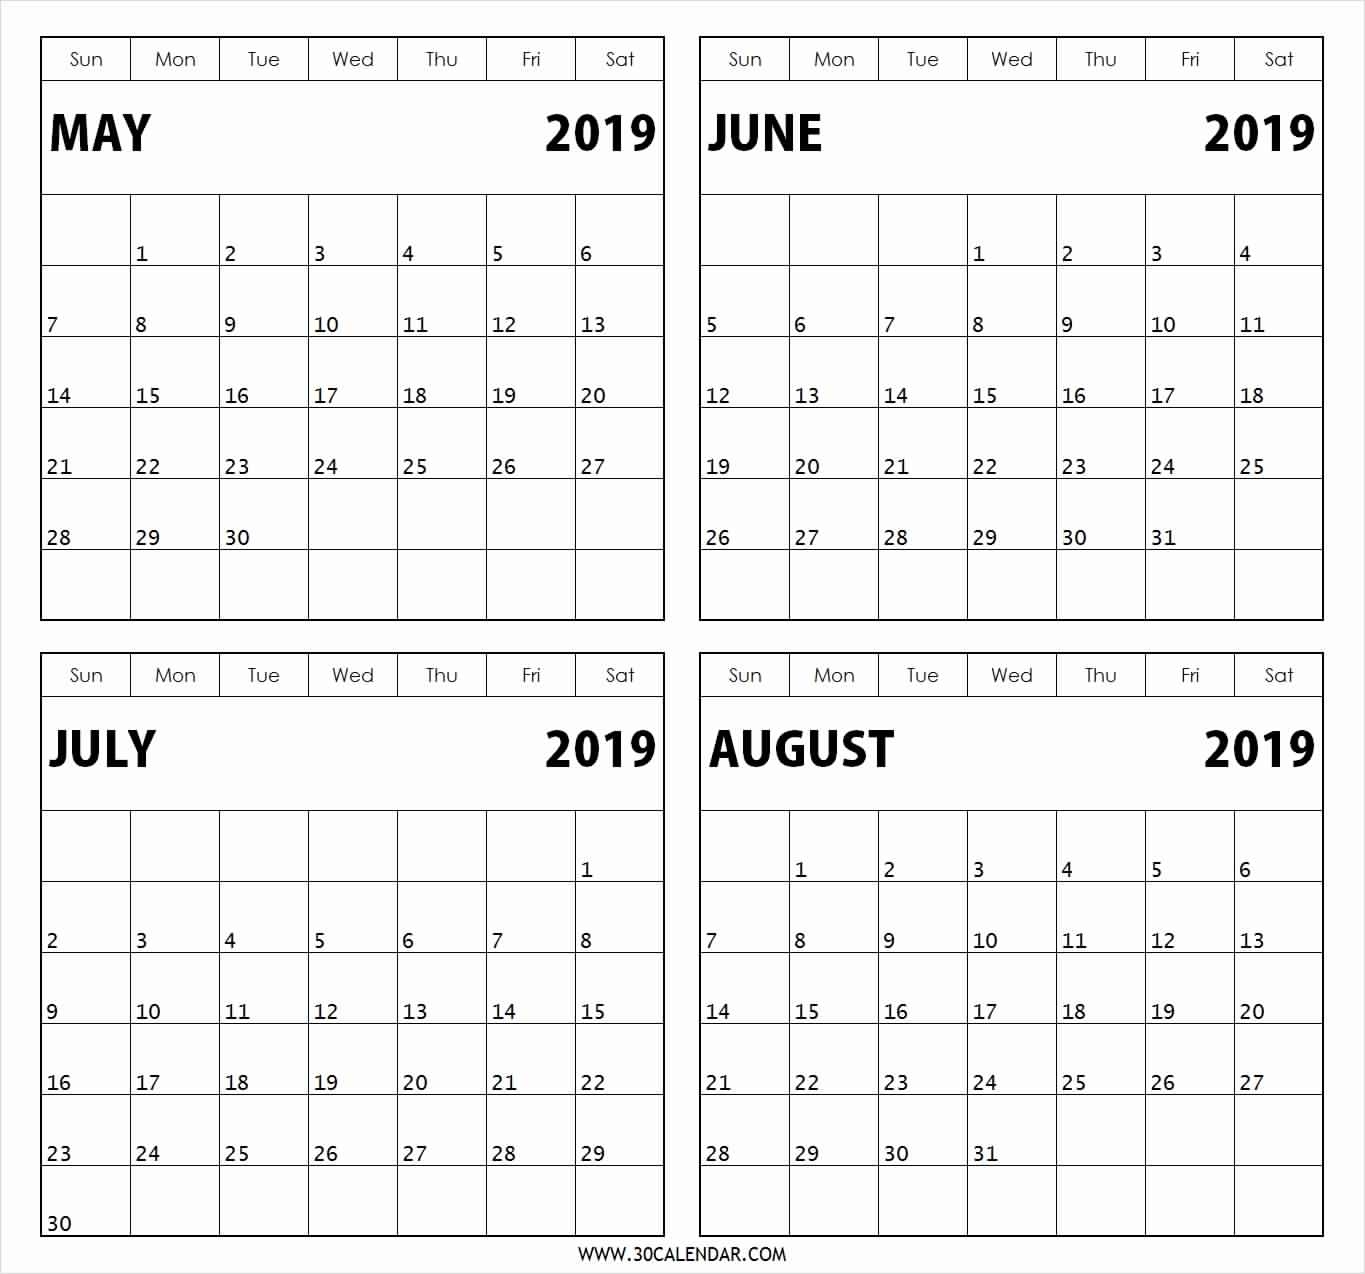 Free Printable 2019 4 Months Per Page Calendar Download | July 2018 Free Printable Calendar 4 Months Per Page